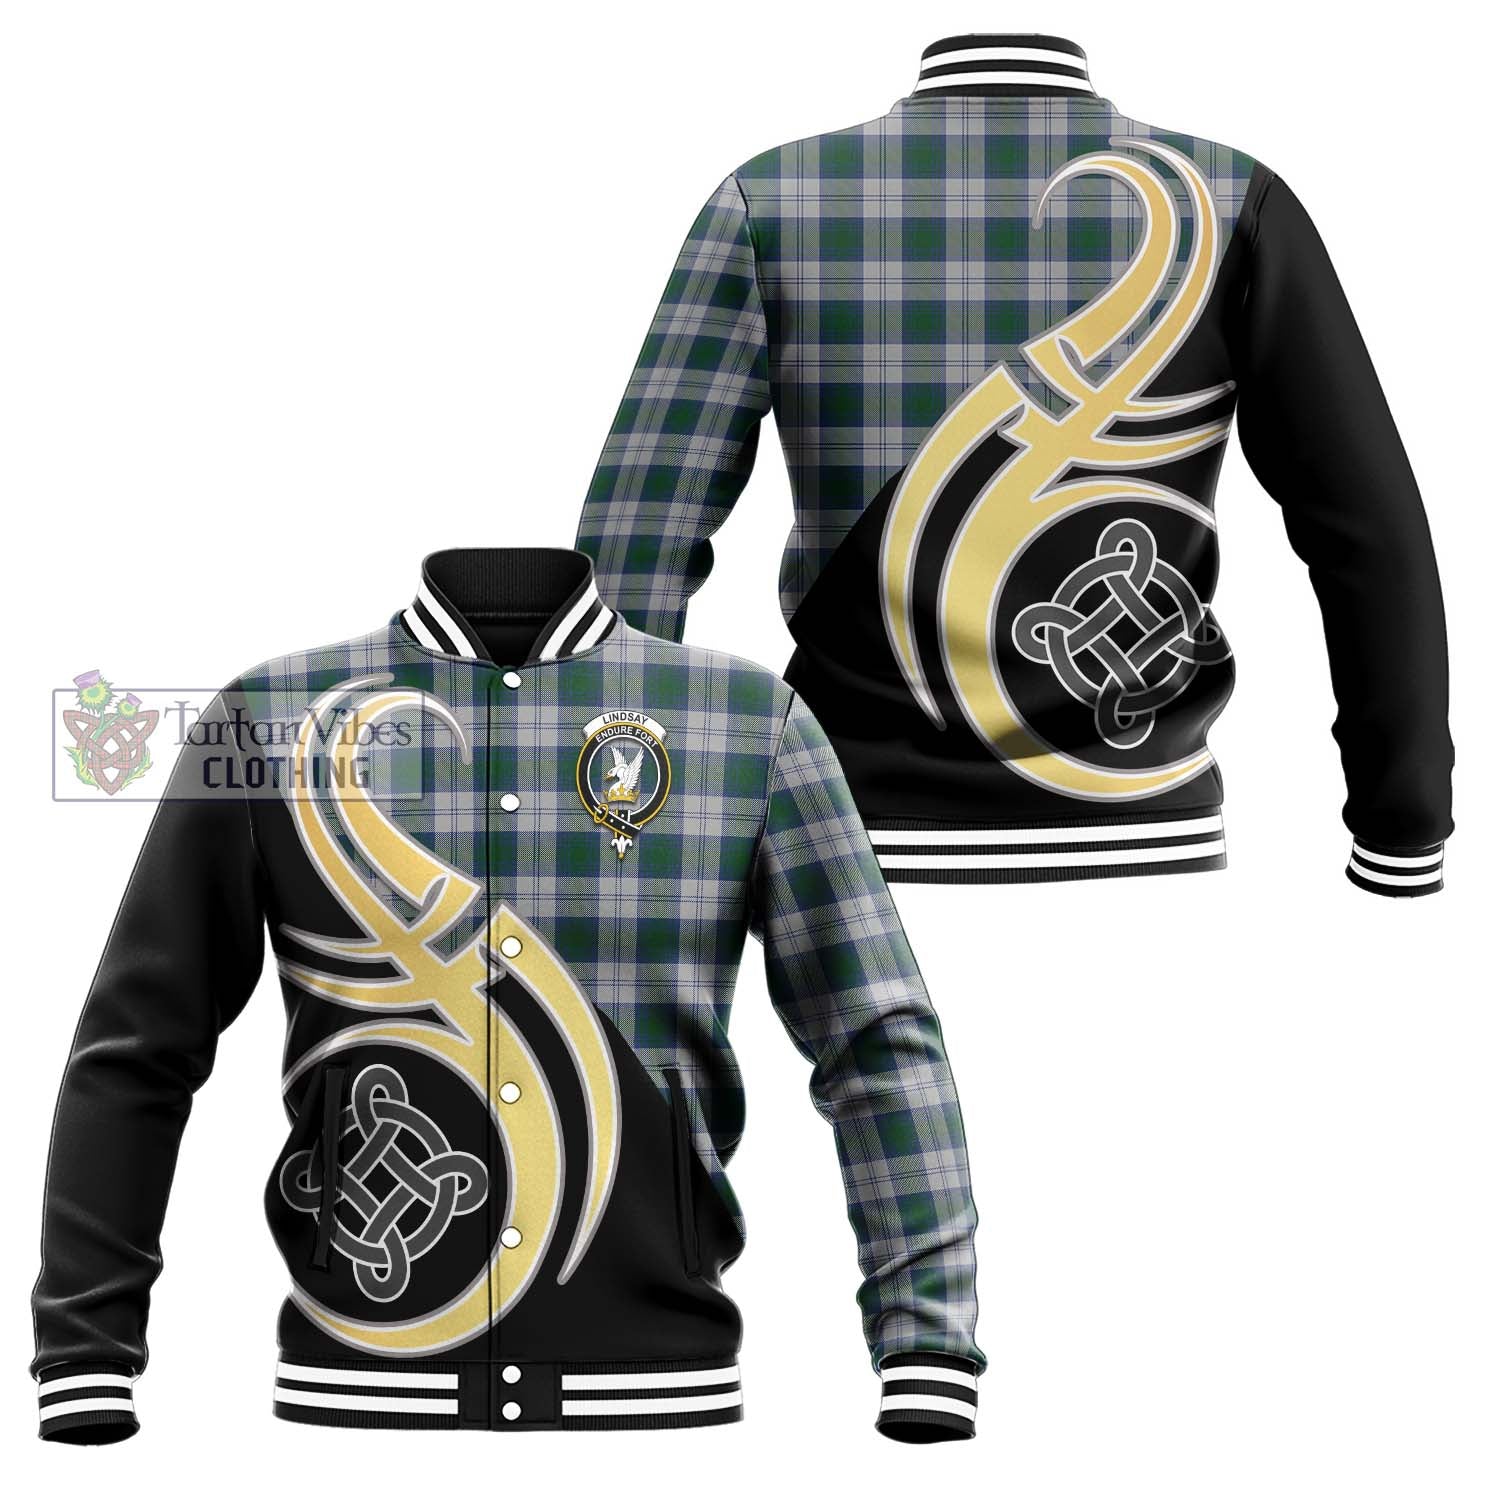 Tartan Vibes Clothing Lindsay Dress Tartan Baseball Jacket with Family Crest and Celtic Symbol Style